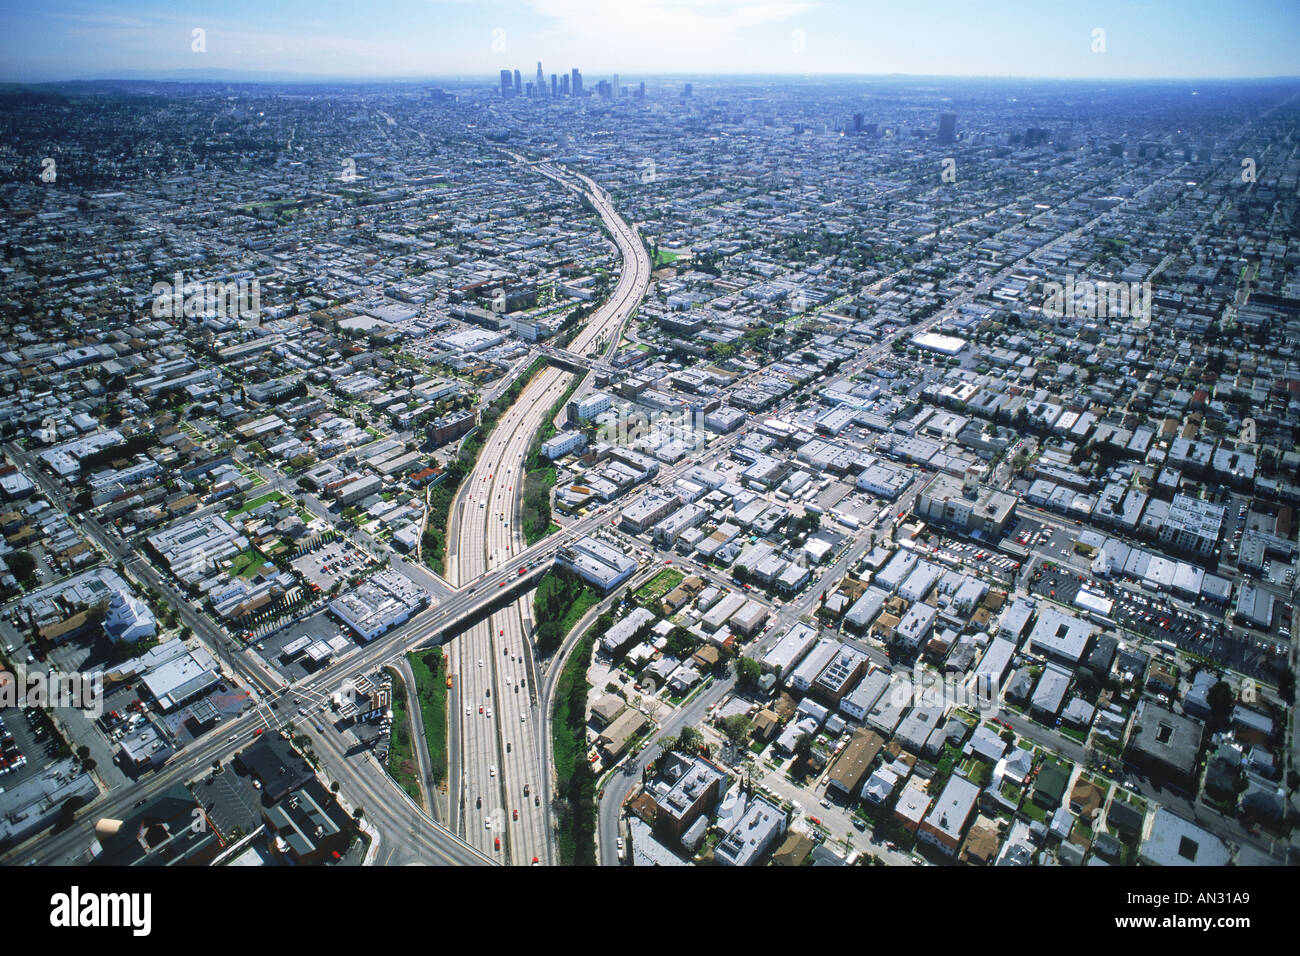 http://c8.alamy.com/comp/AN31A9/aerial-view-of-freeway-cutting-through-los-angeles-urban-sprawl-AN31A9.jpg